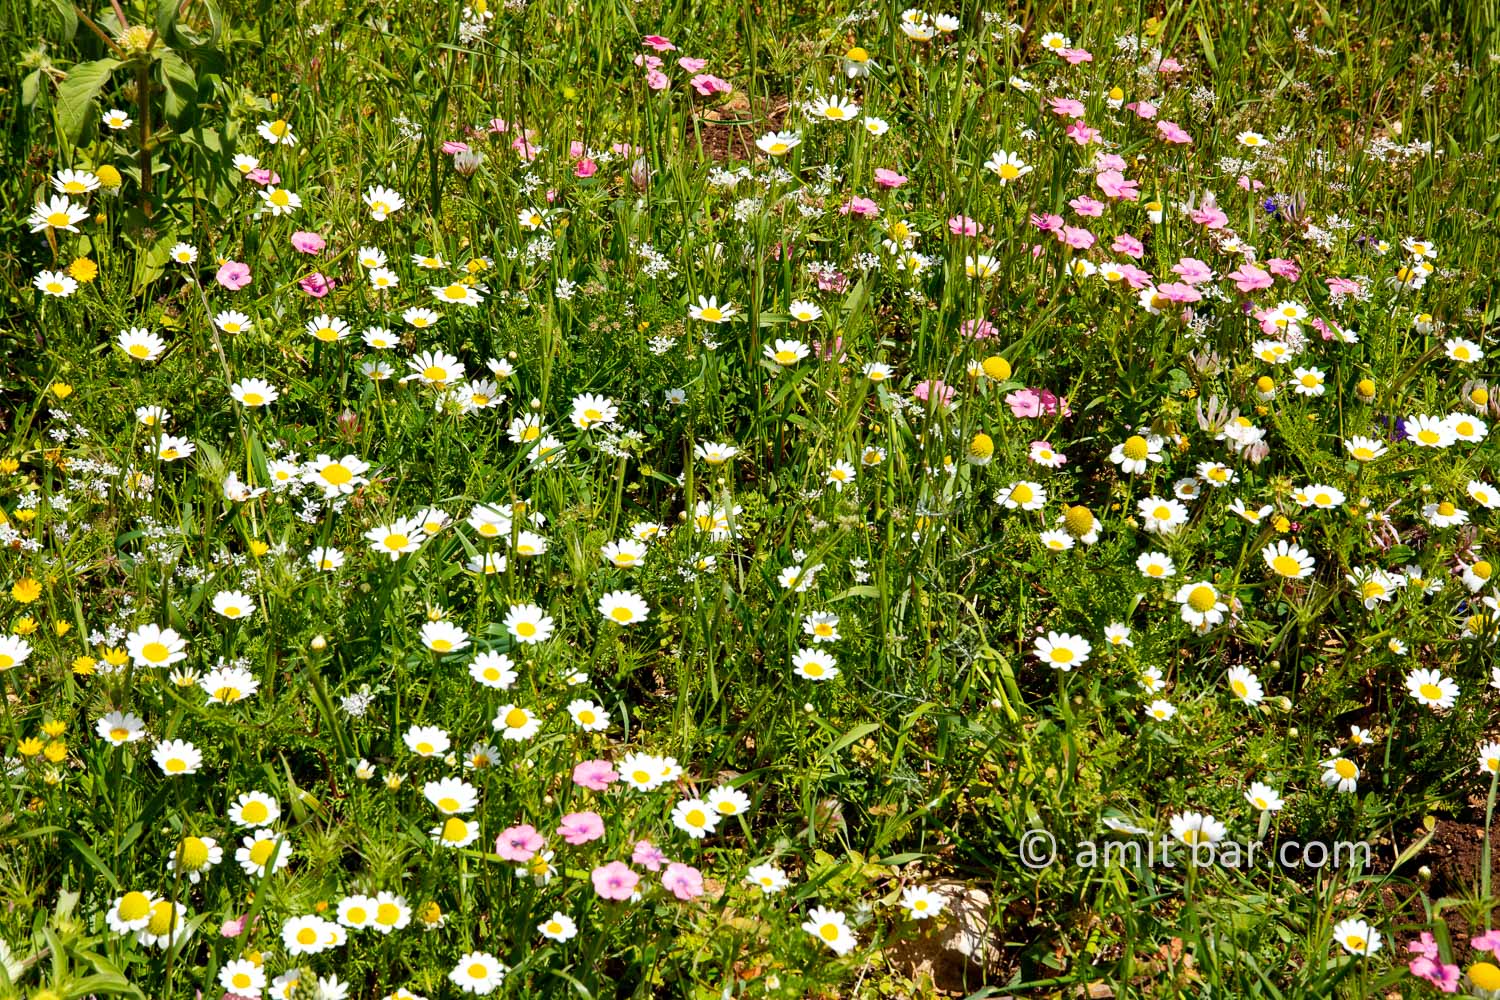 Carmel wild flowers XII: wild flowers on mountain Carmel, Israel in the spring time